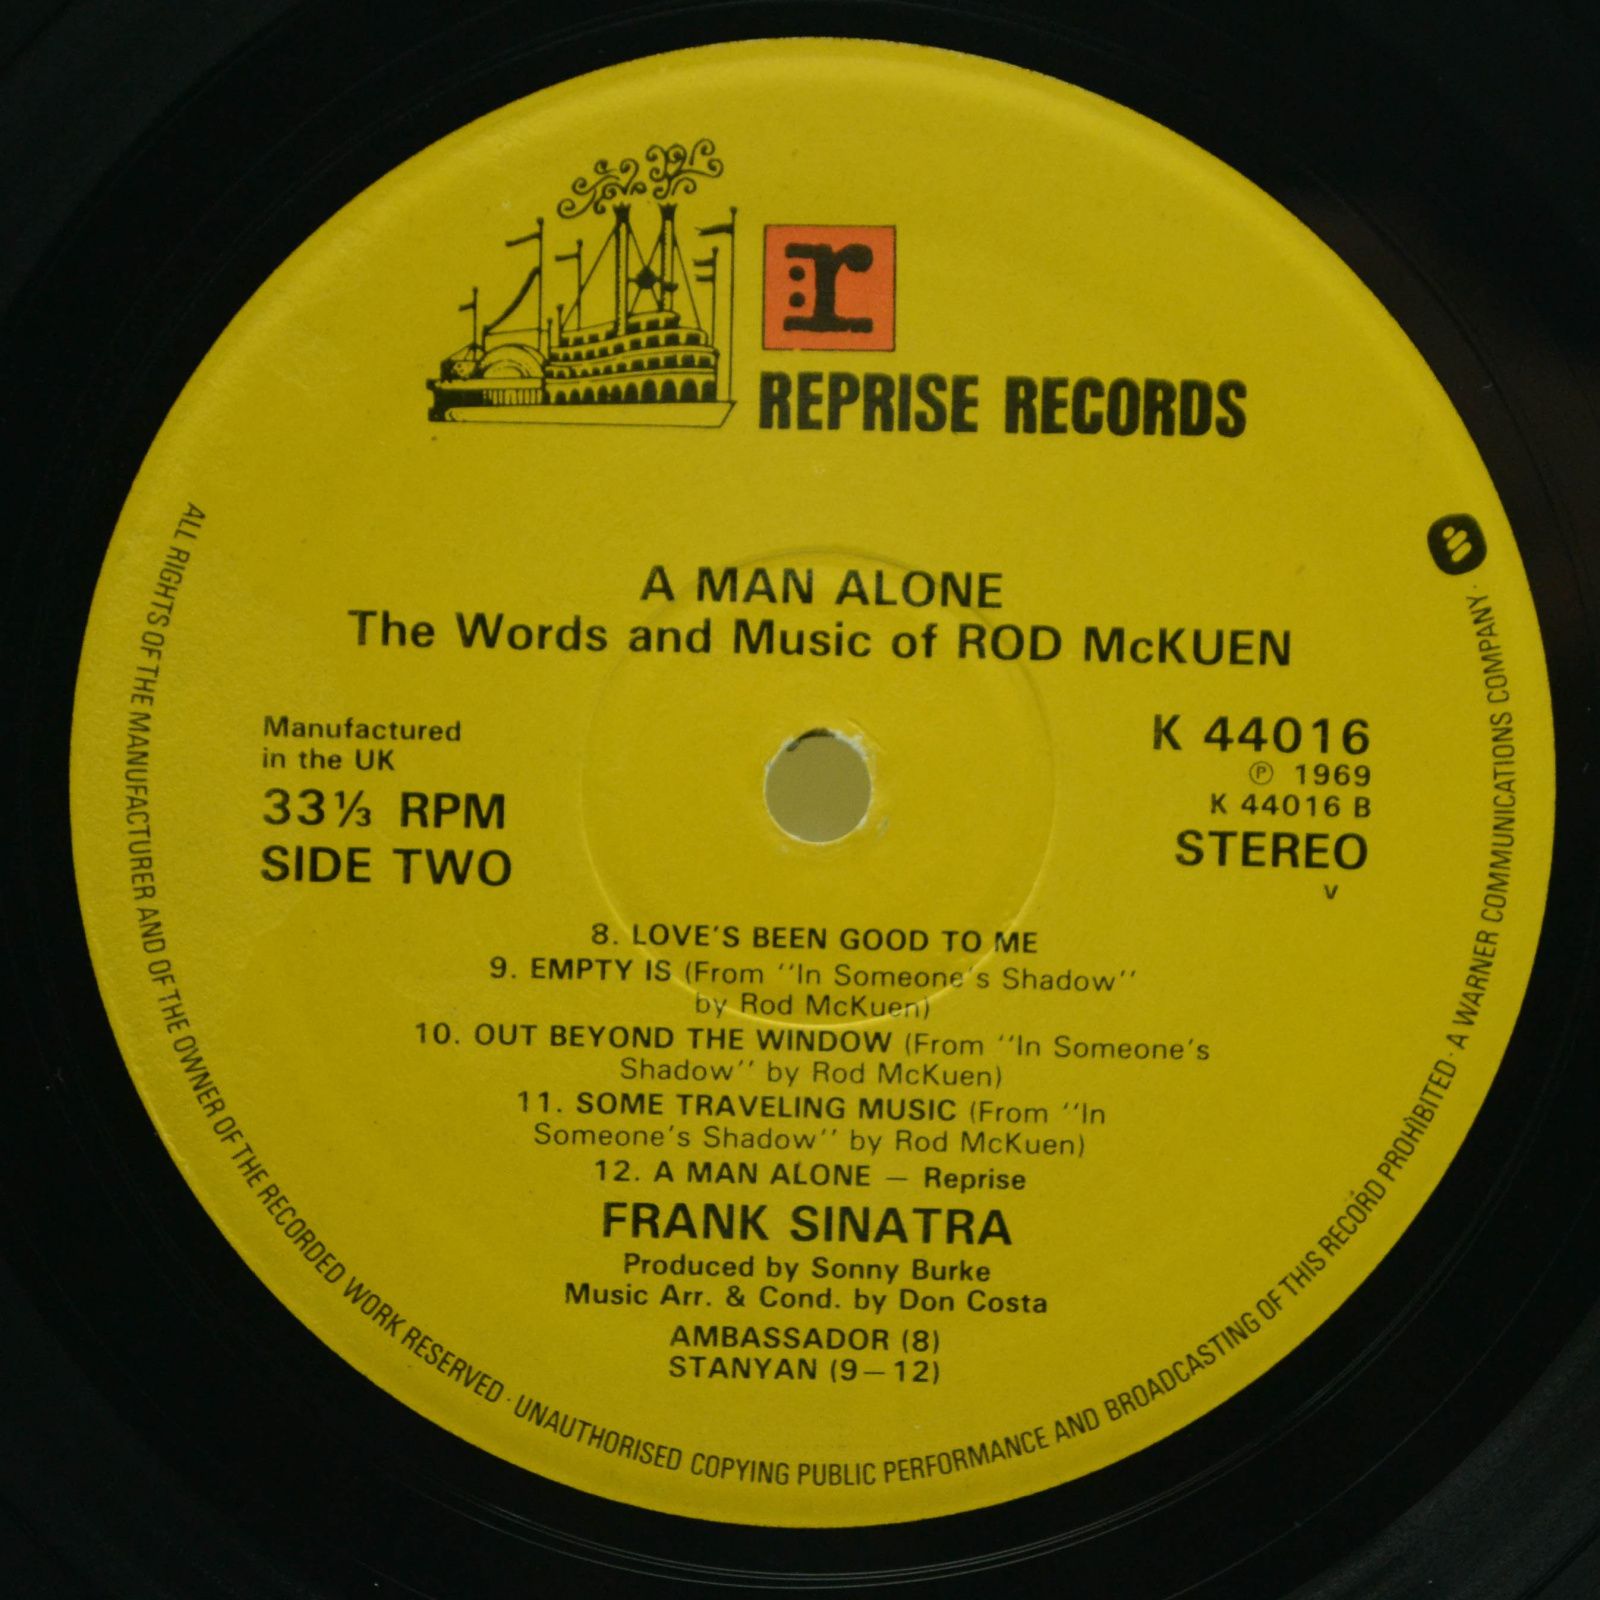 Frank Sinatra — A Man Alone & Other Songs Of Rod McKuen (UK), 1969